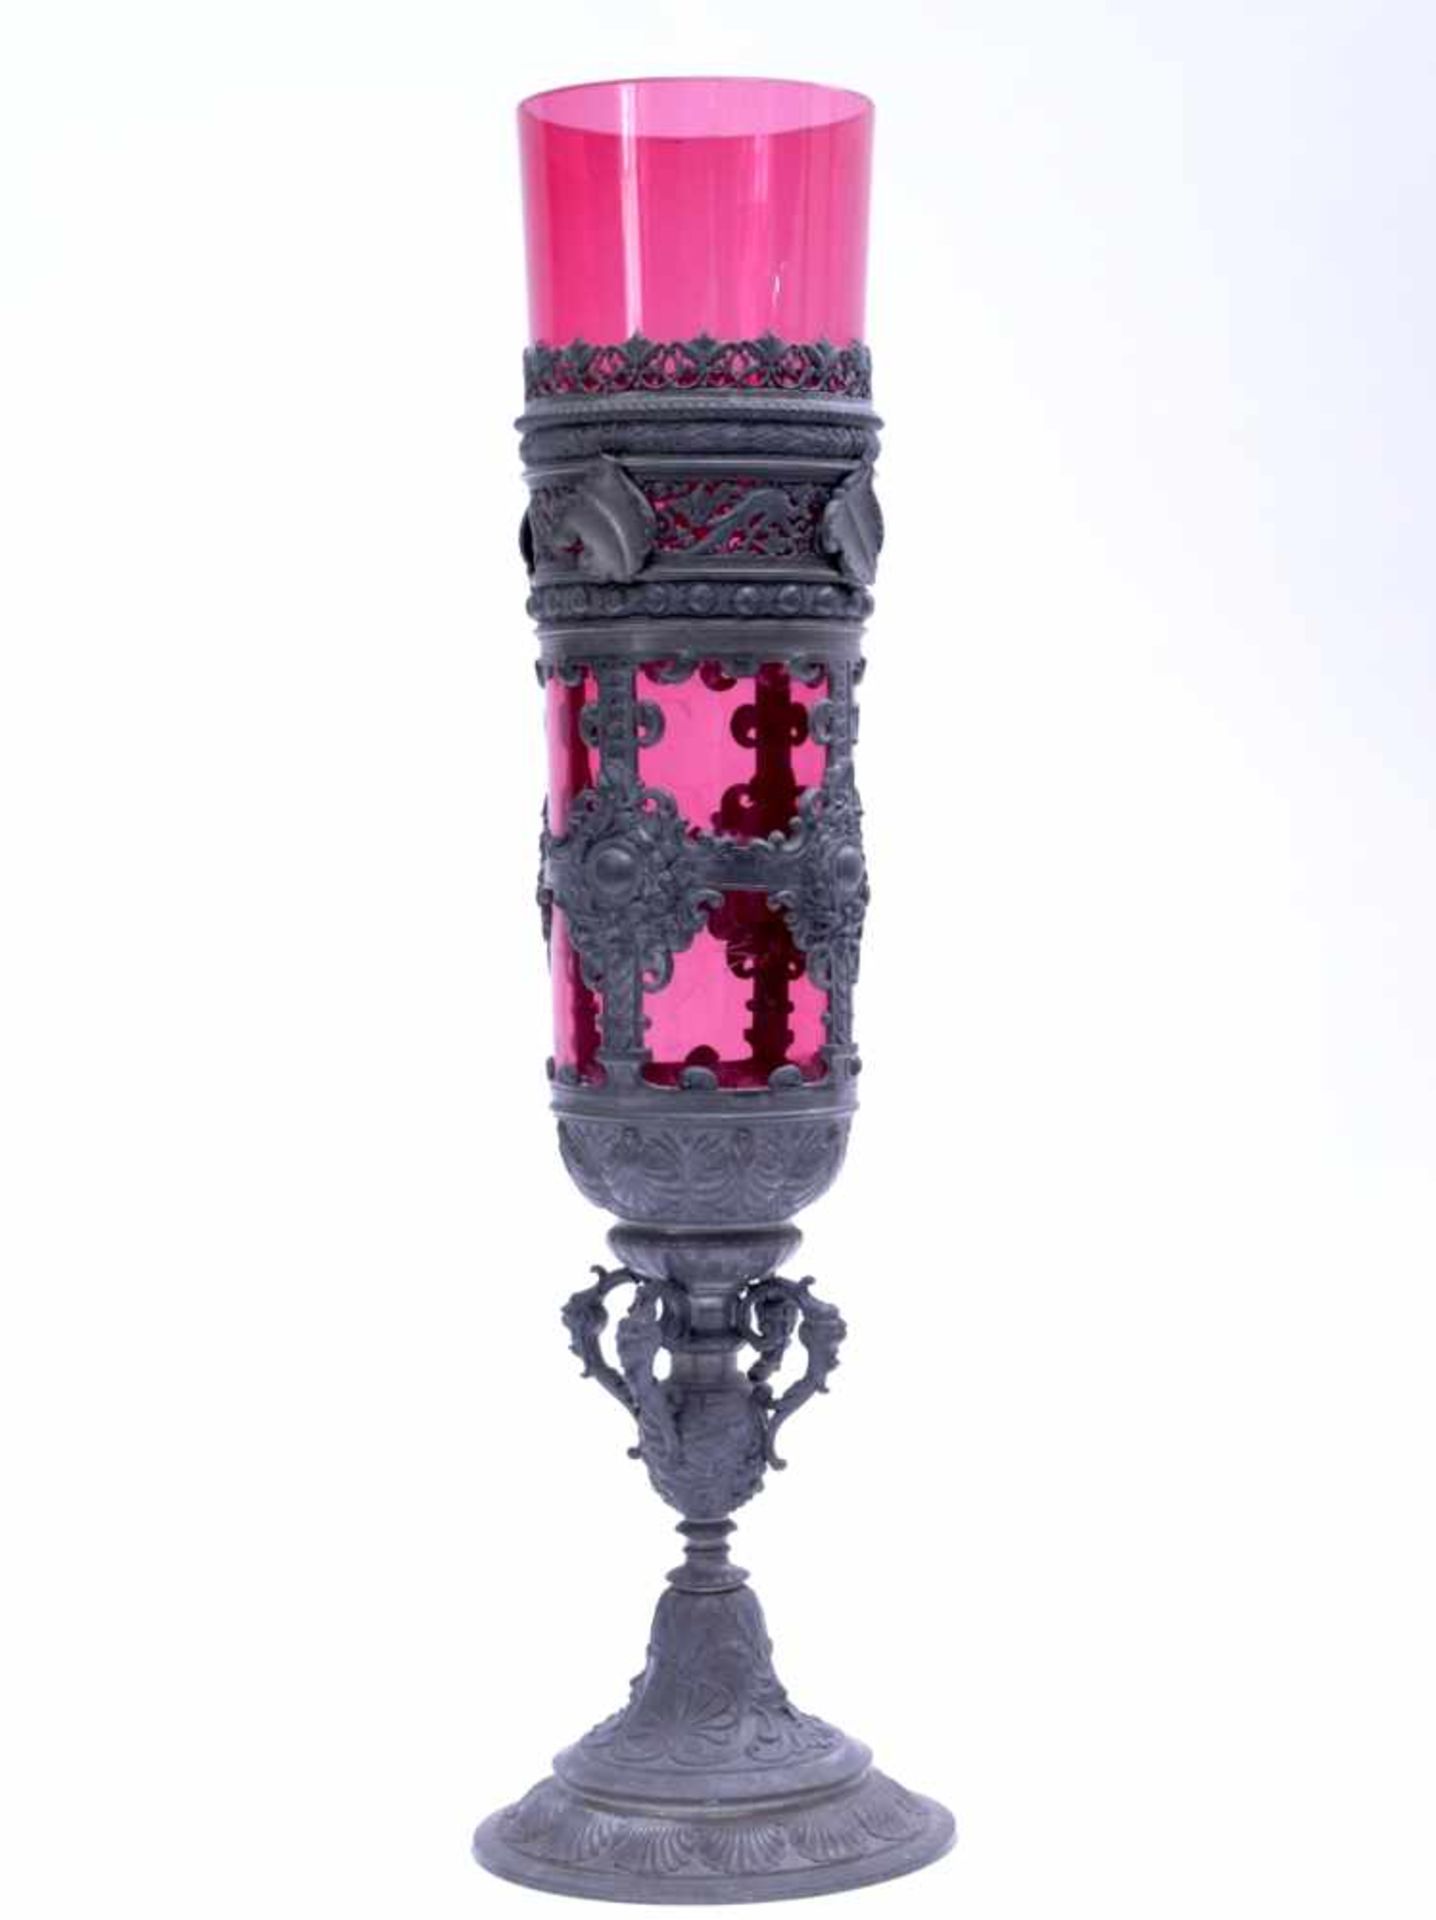 Historismus Prunkpokal um 1880Hohes, rot eingefärbtes Glas in aufwendig gestalteter